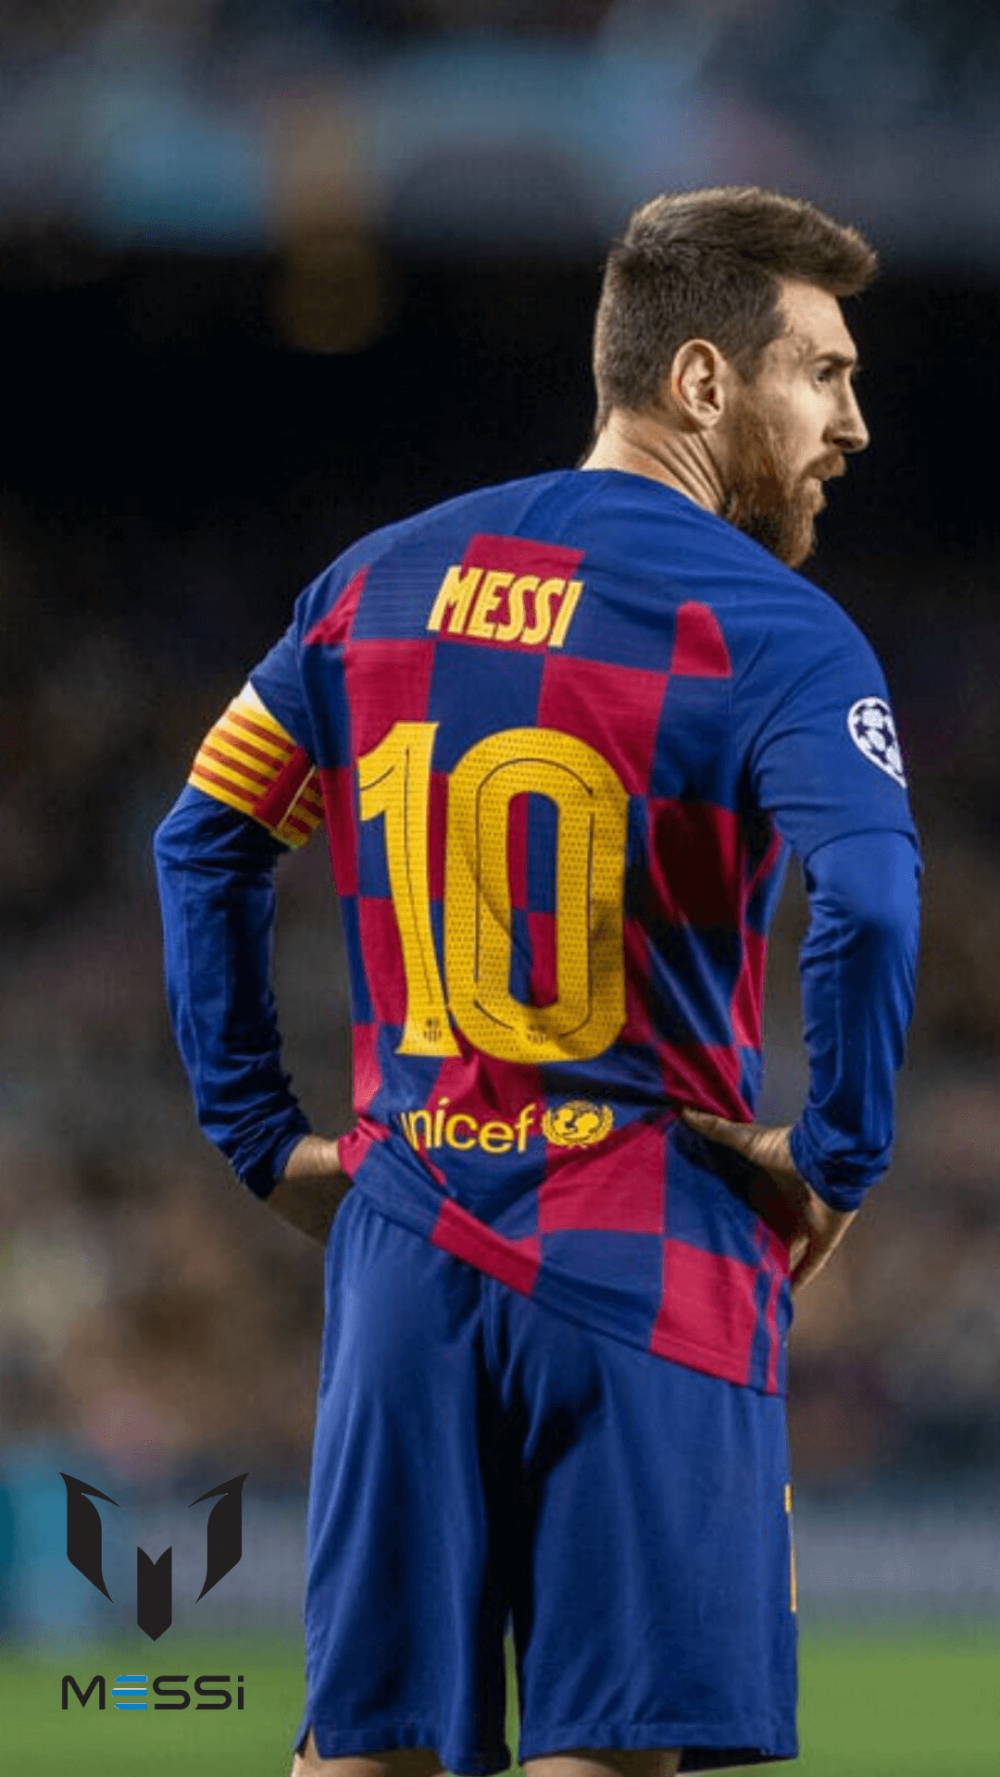 Messi 2020 4k Mobile Wallpaper. Lionel messi, Messi, Lionel messi wallpaper